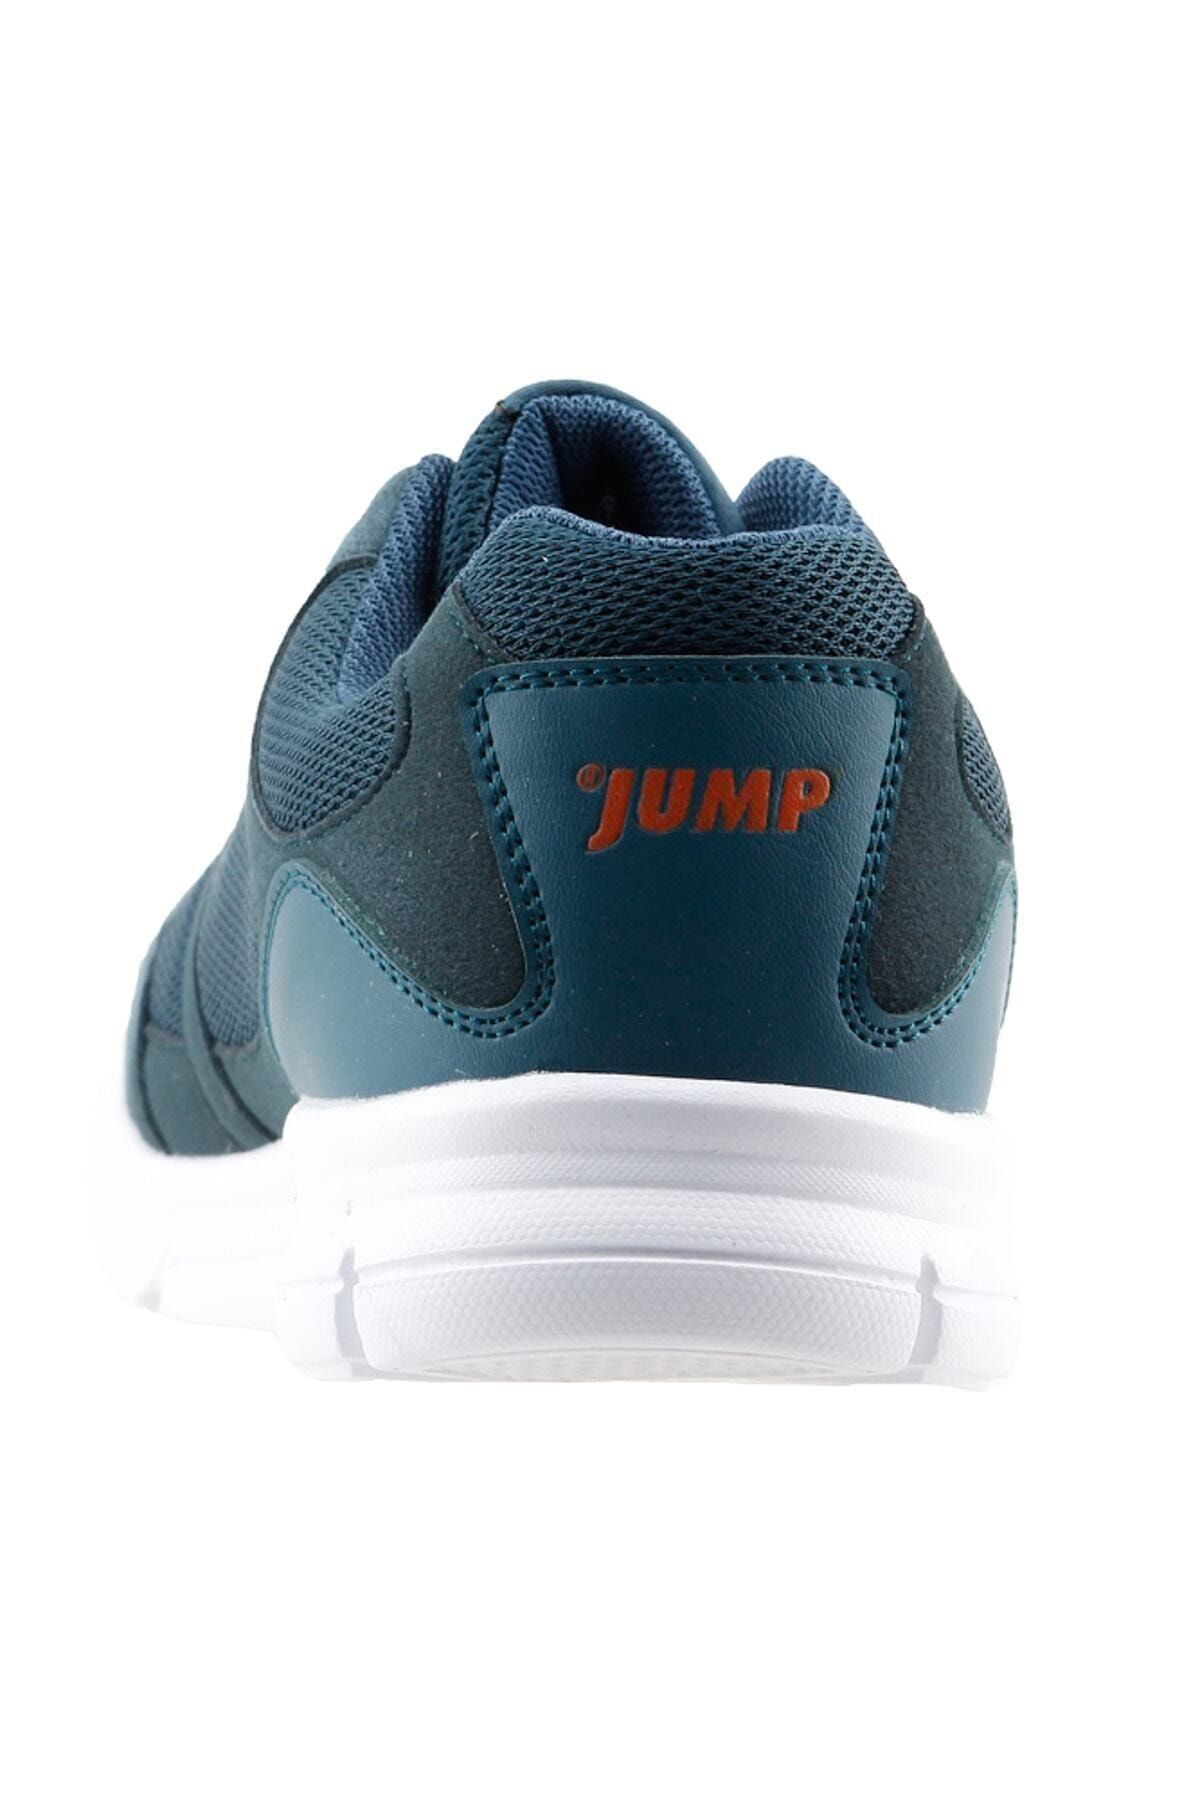 Jump کفش سبز یونیسکس 190 10555-1G